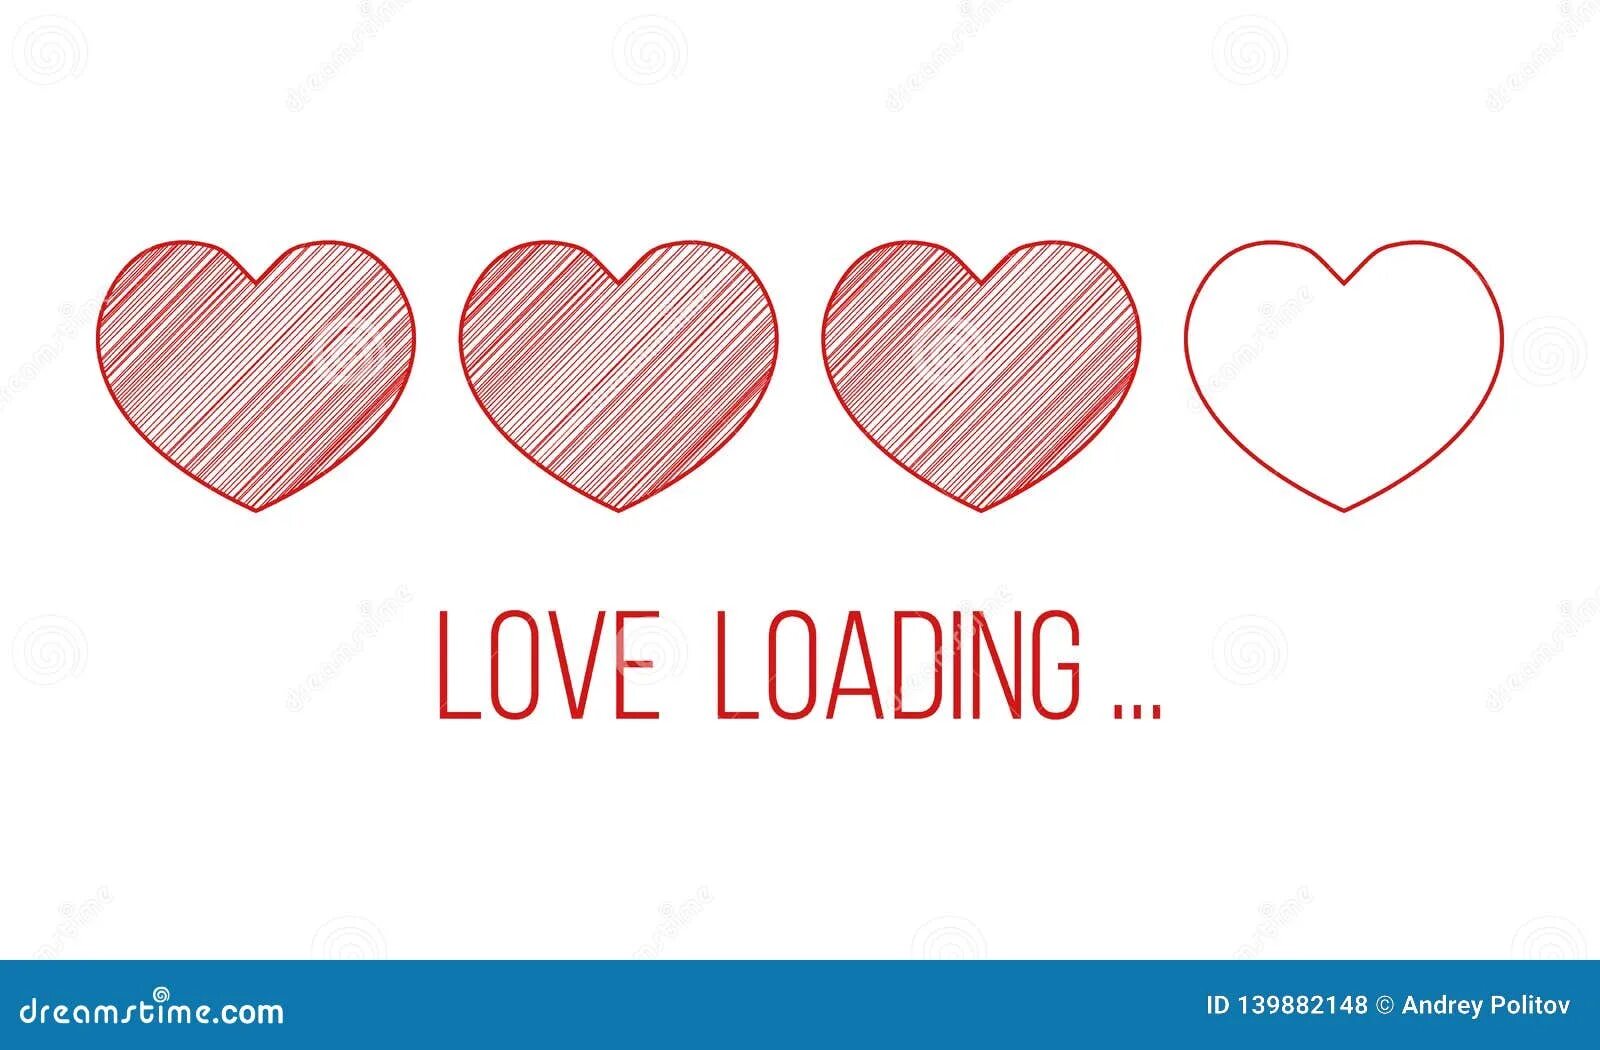 Load love. Загрузка сердца. Лодинг лов. Loading любовь. Лоадинг сердце.